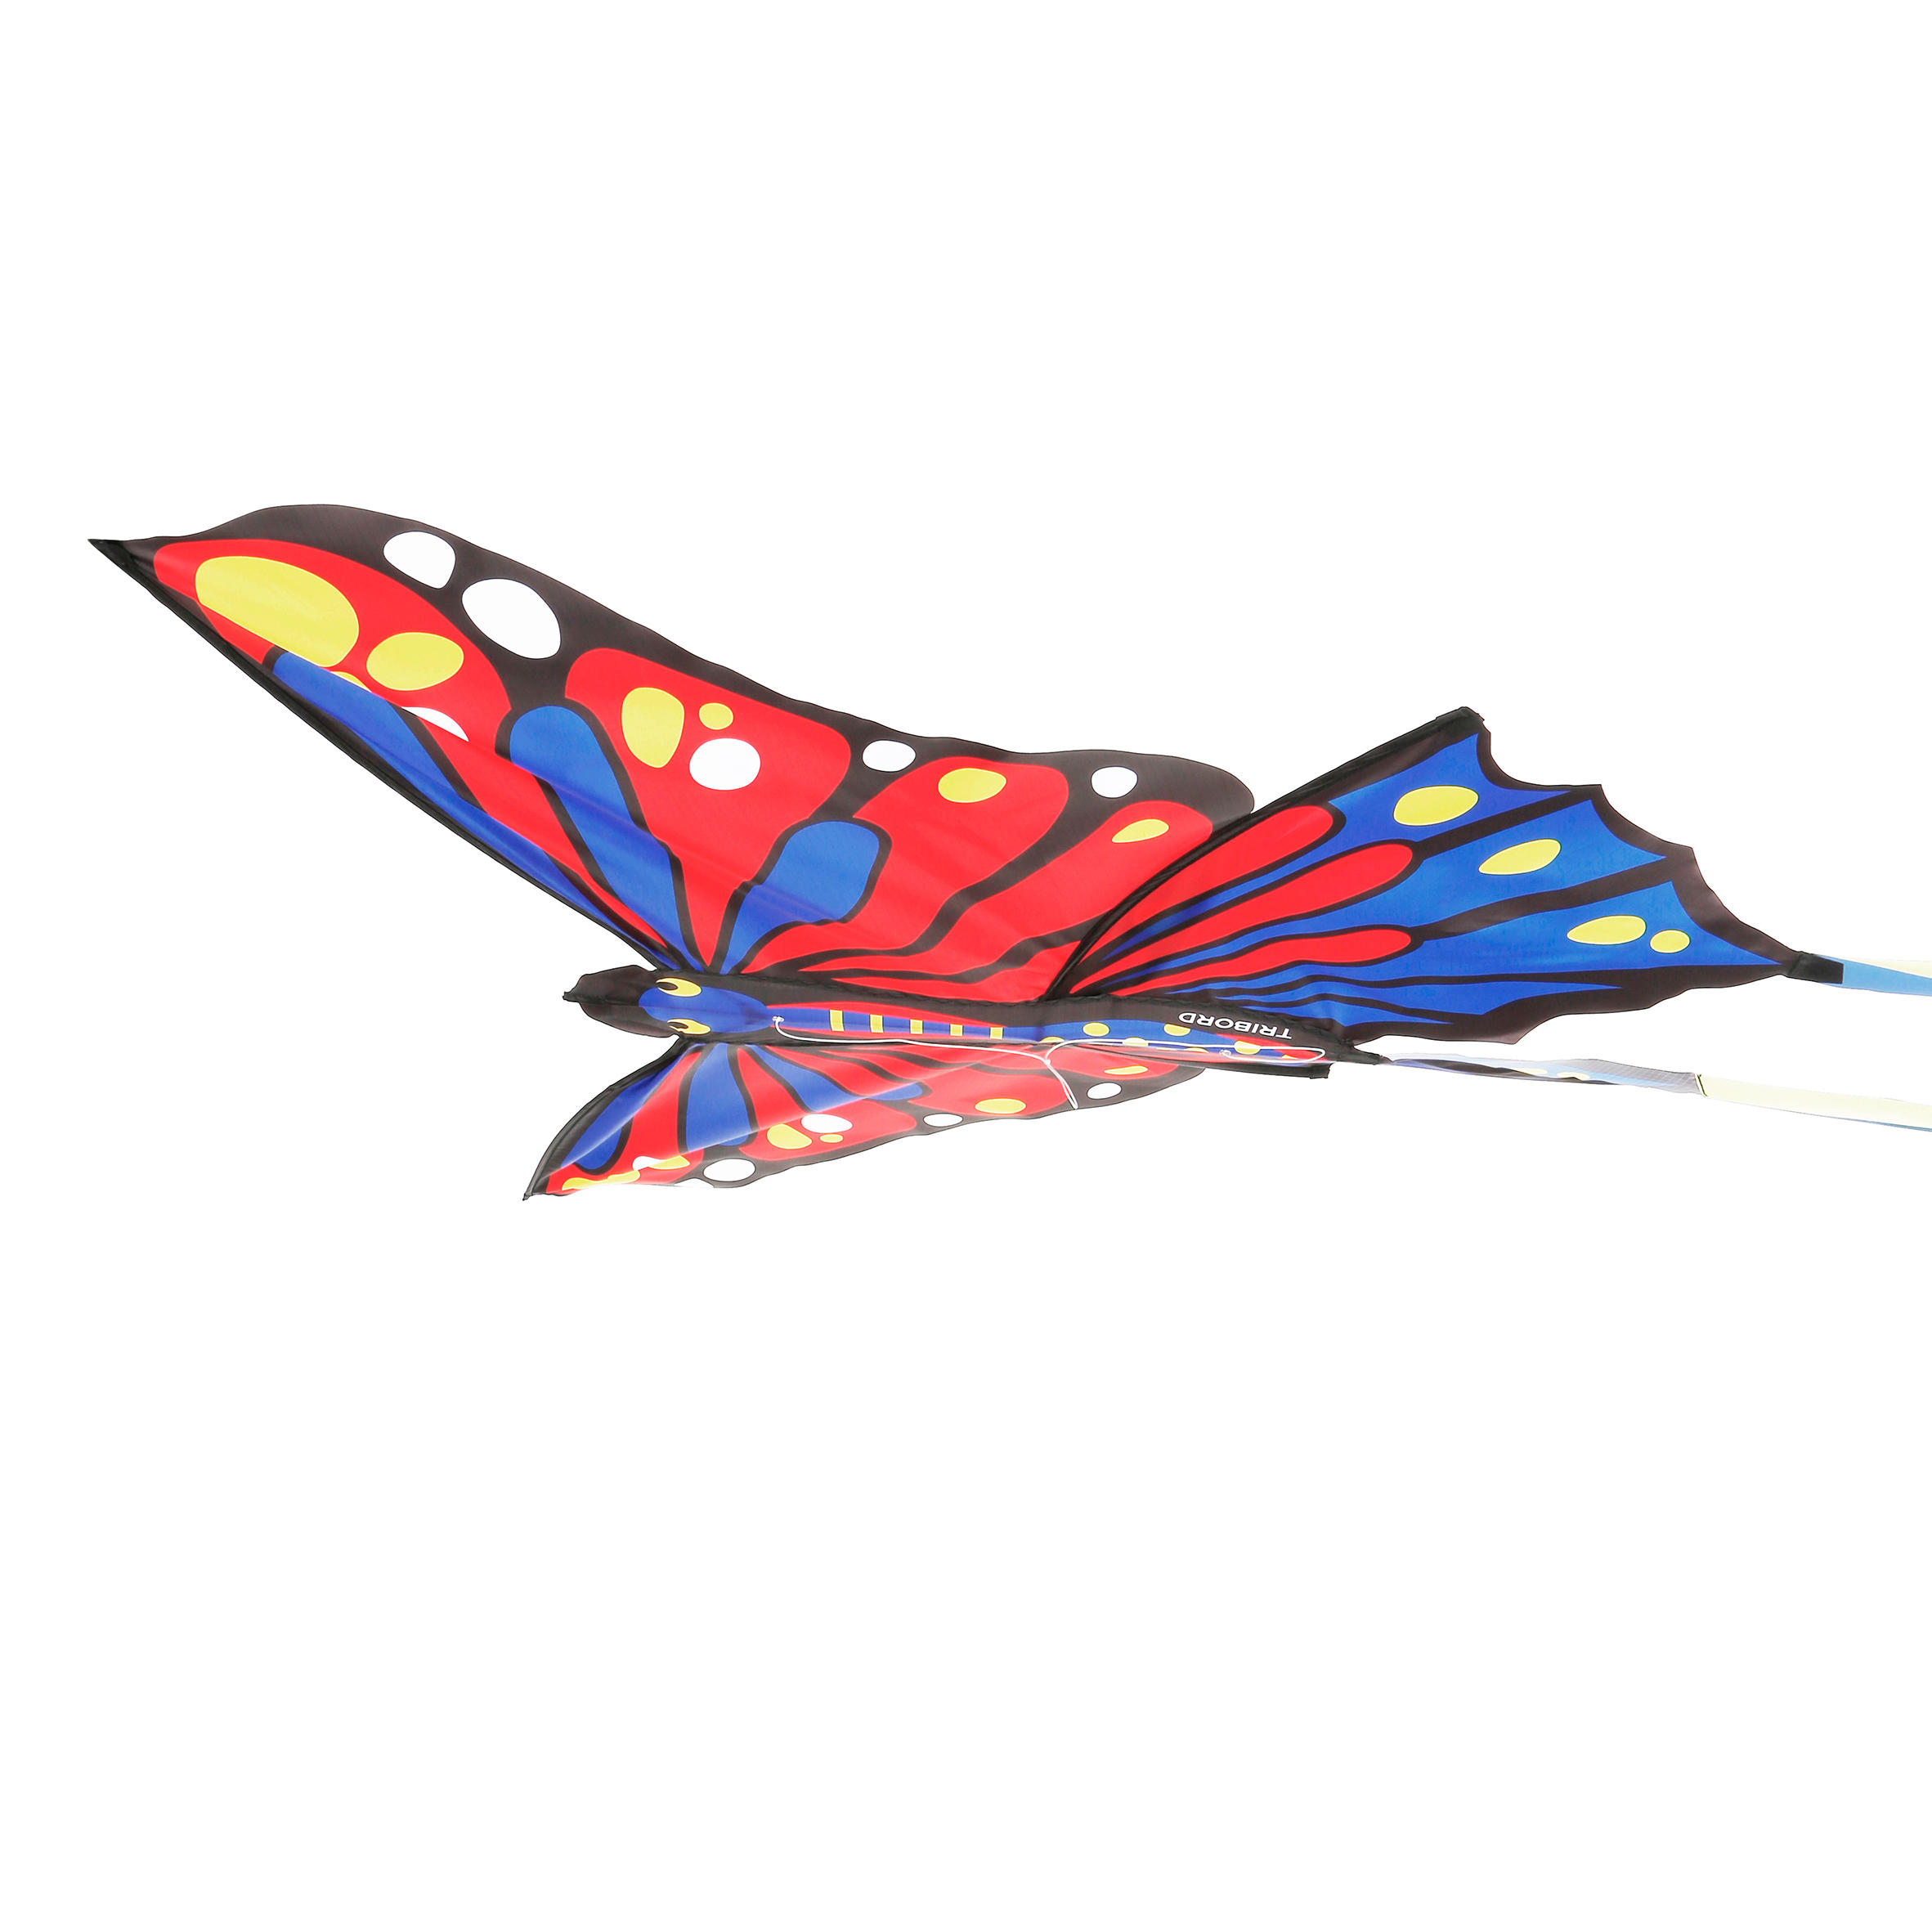 MFK 160 Static Kite - Red/Blue 10/17